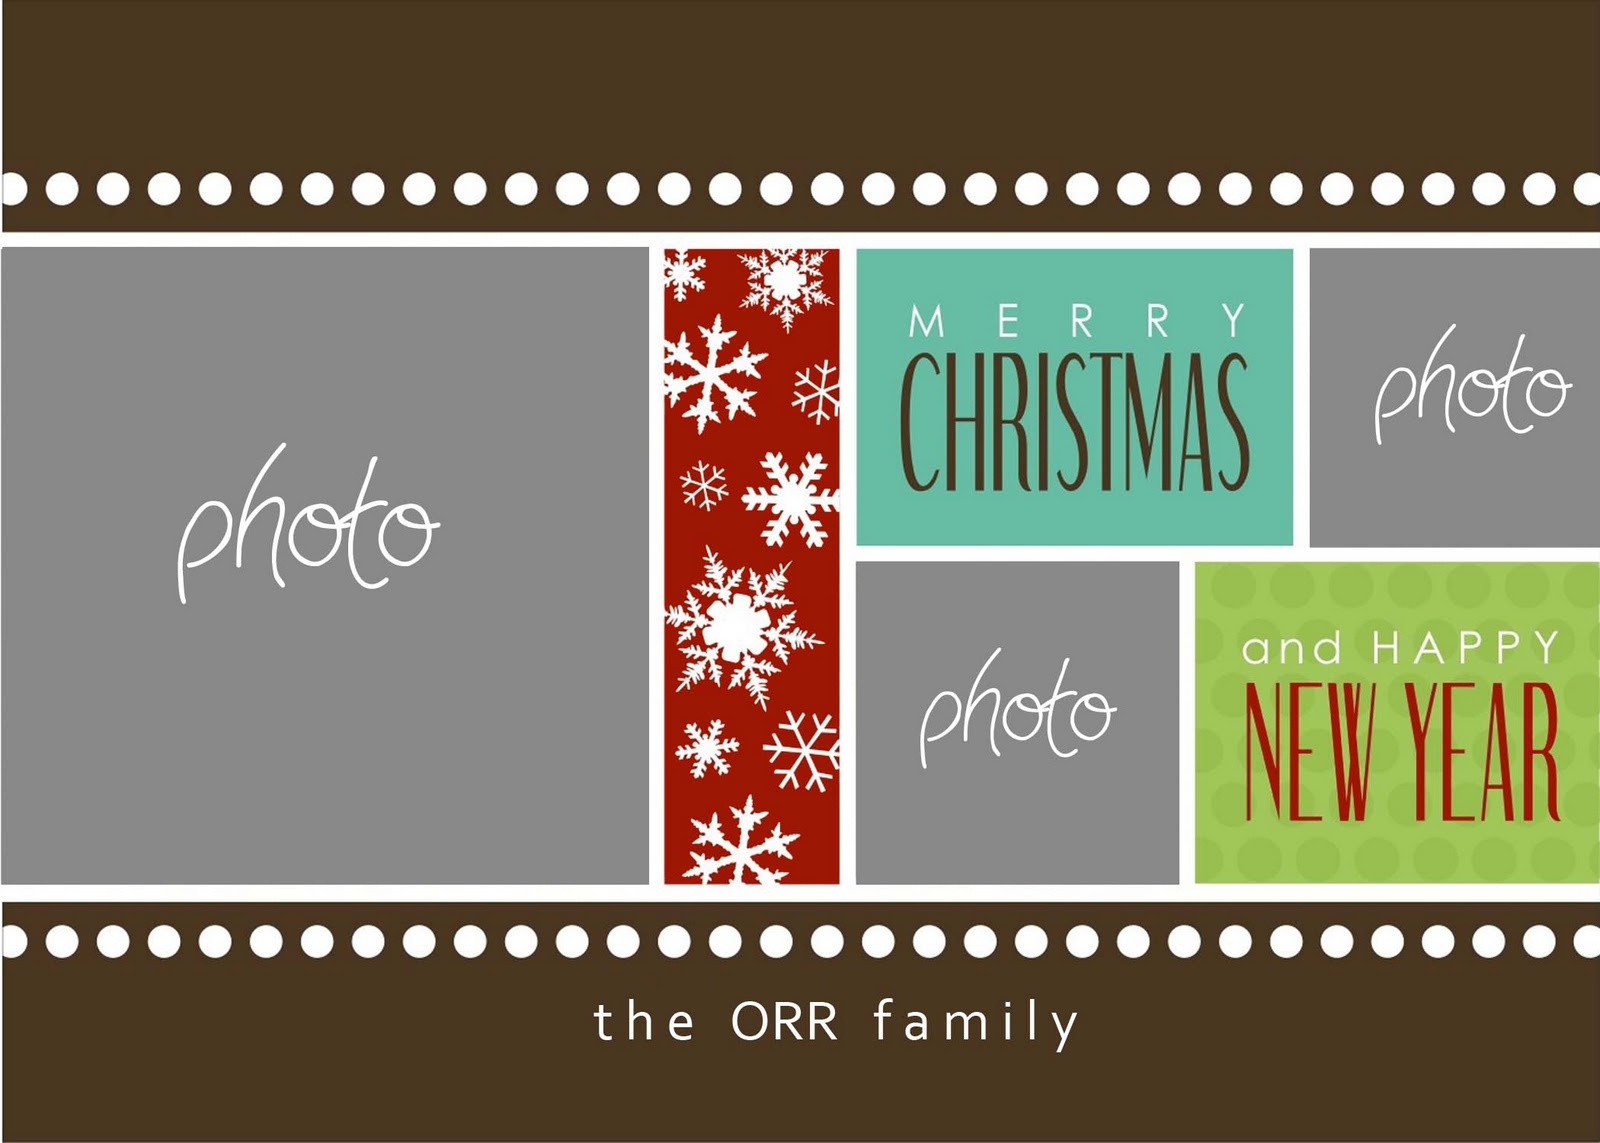 8 Free Photoshop Christmas Card Templates Images – Photoshop Intended For Christmas Photo Card Templates Photoshop